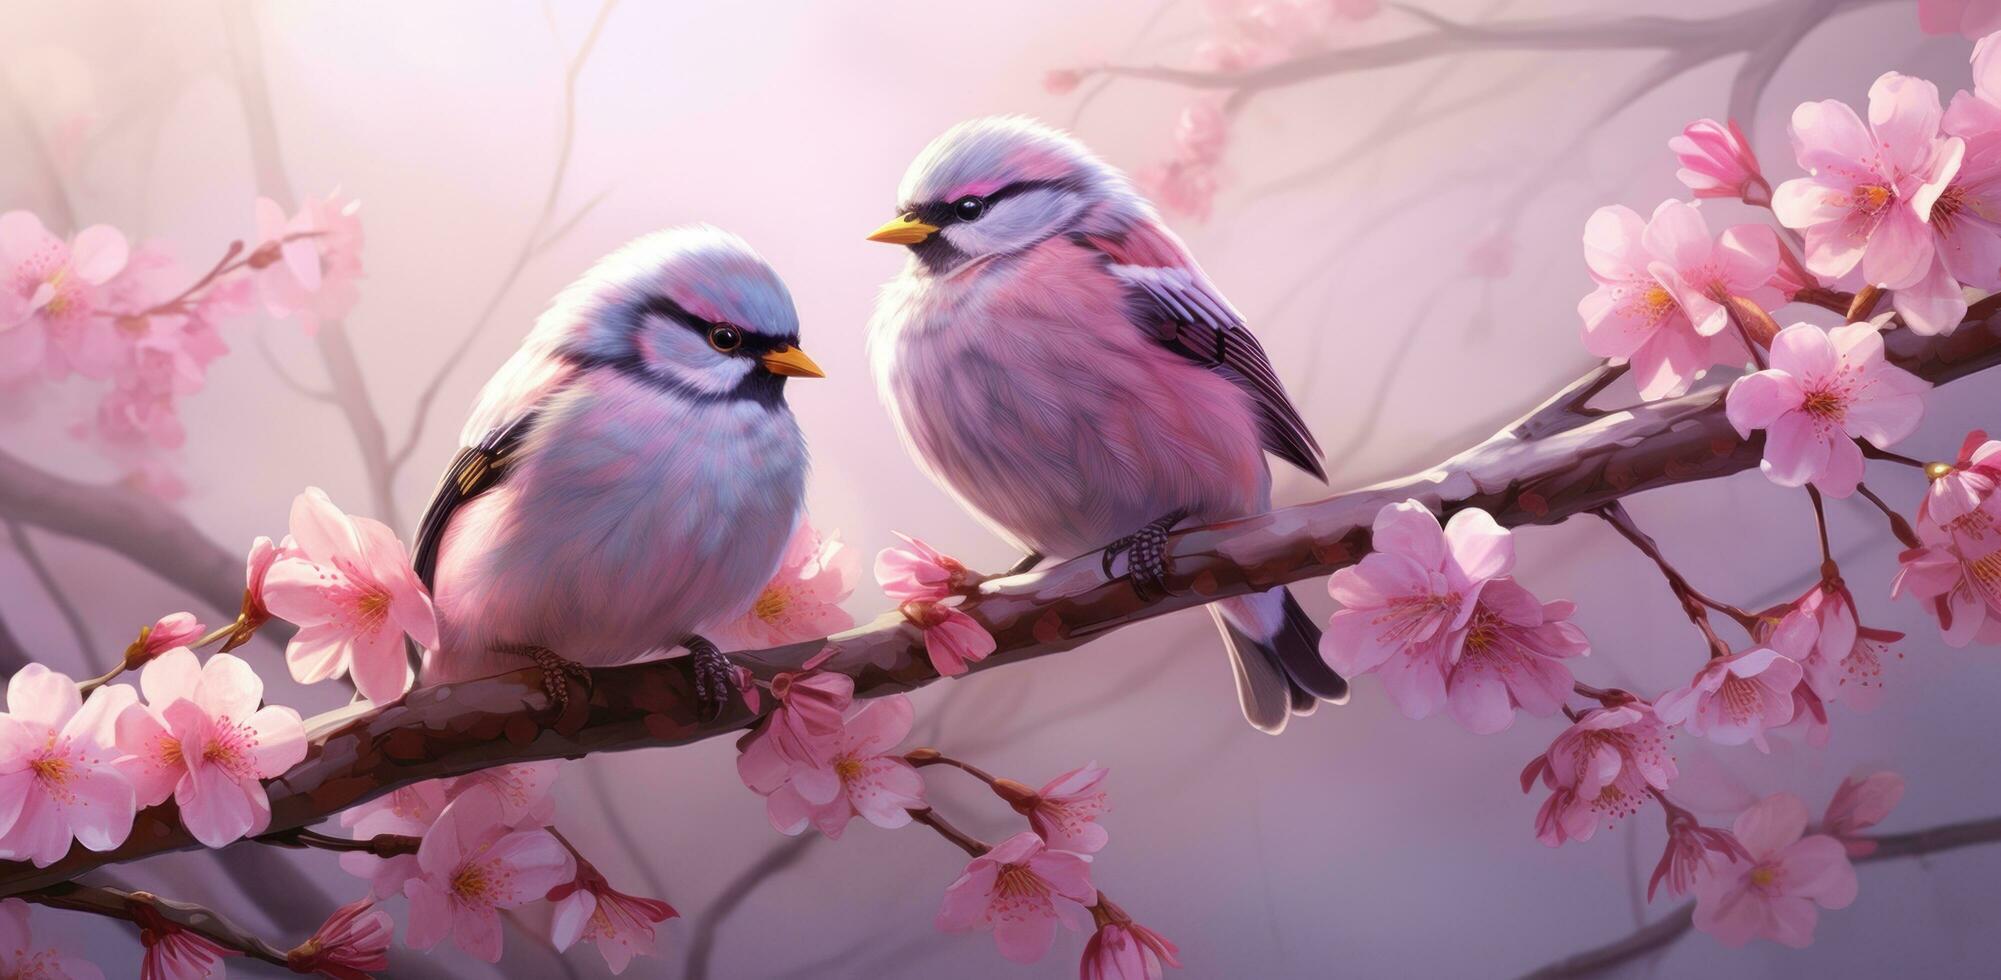 ai generado dos aves son sentado en un rosado florecer rama foto